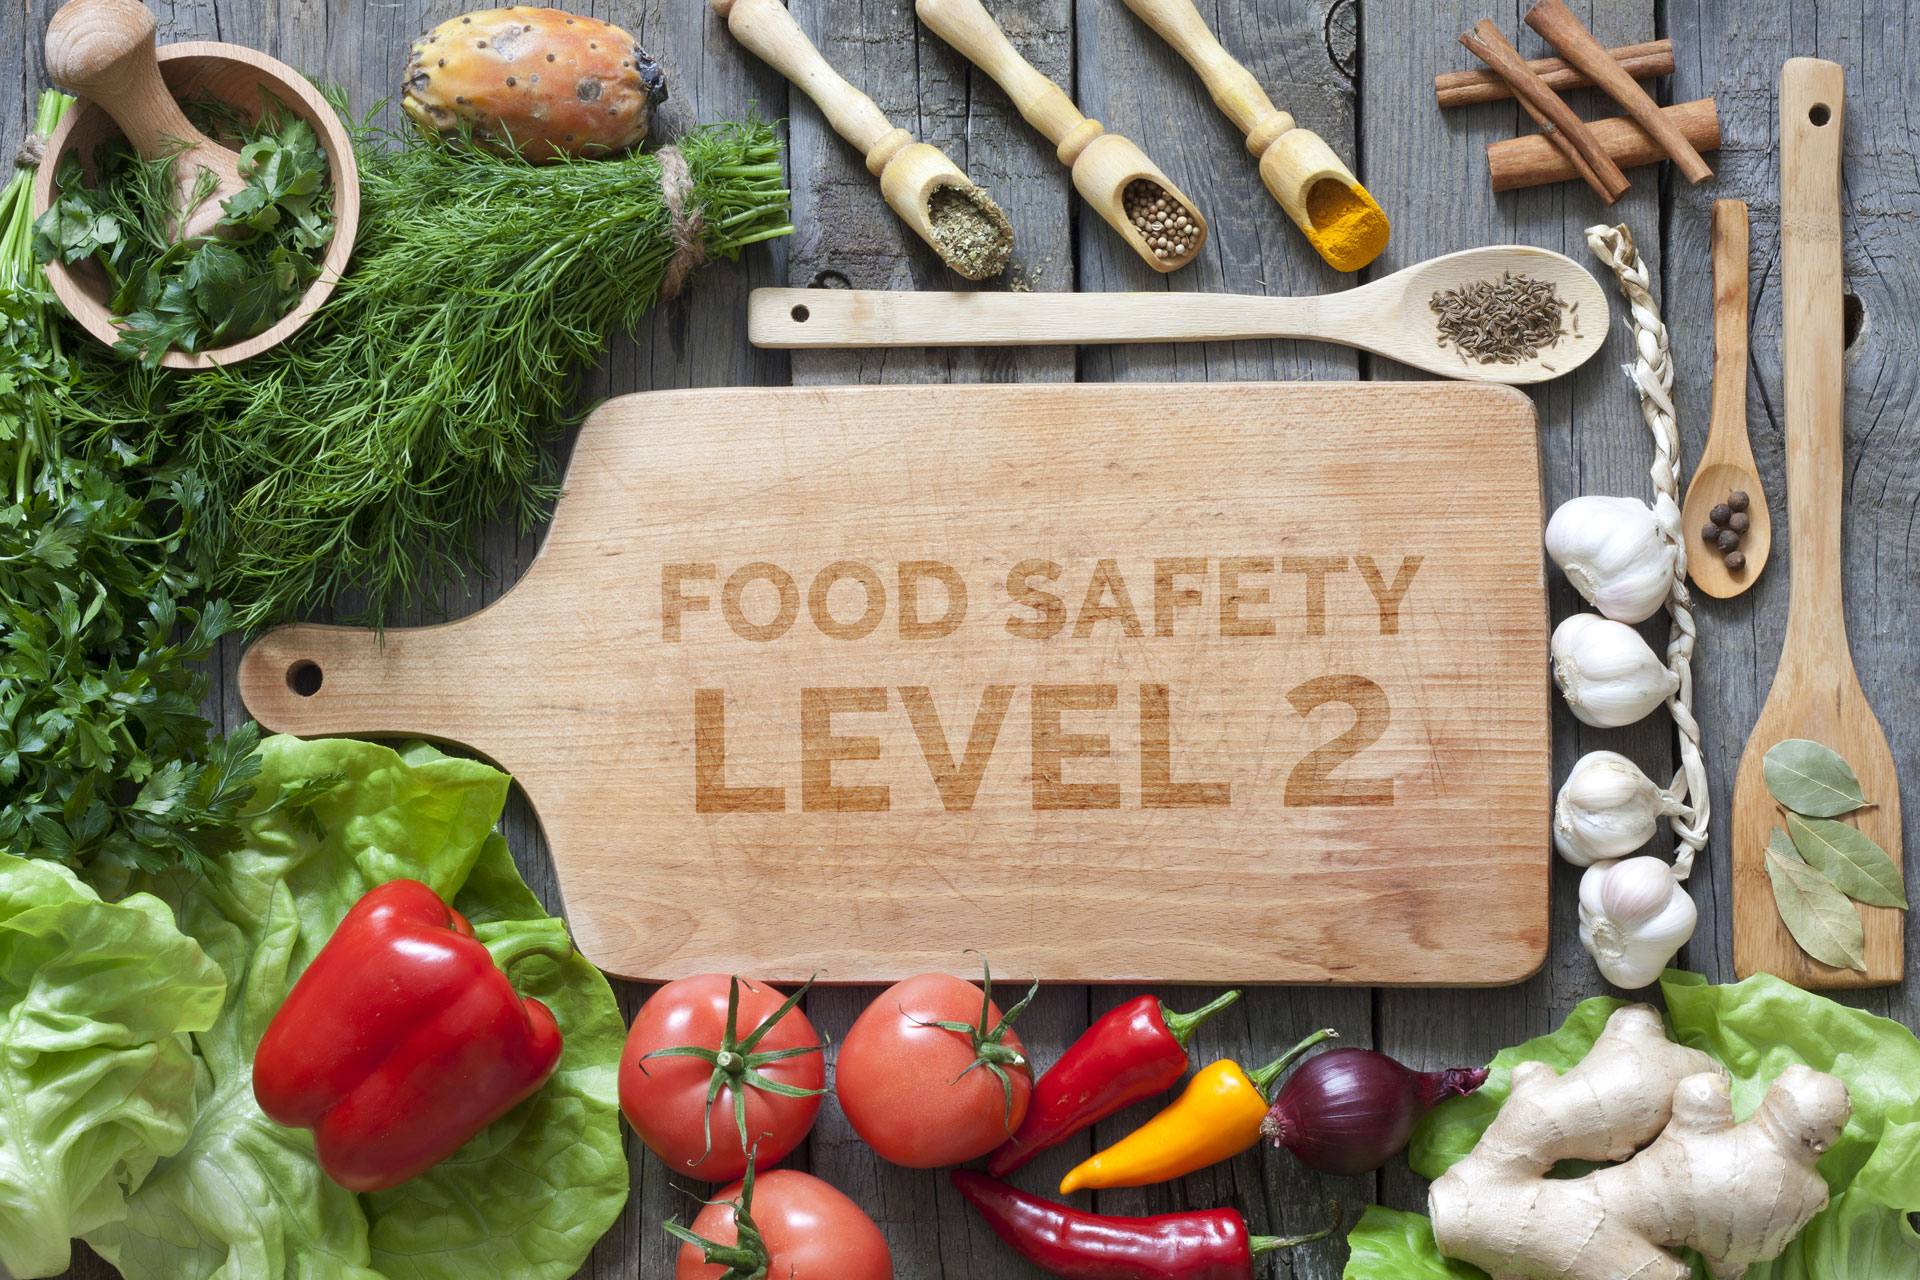 Food-Safety-Level-2.jpg